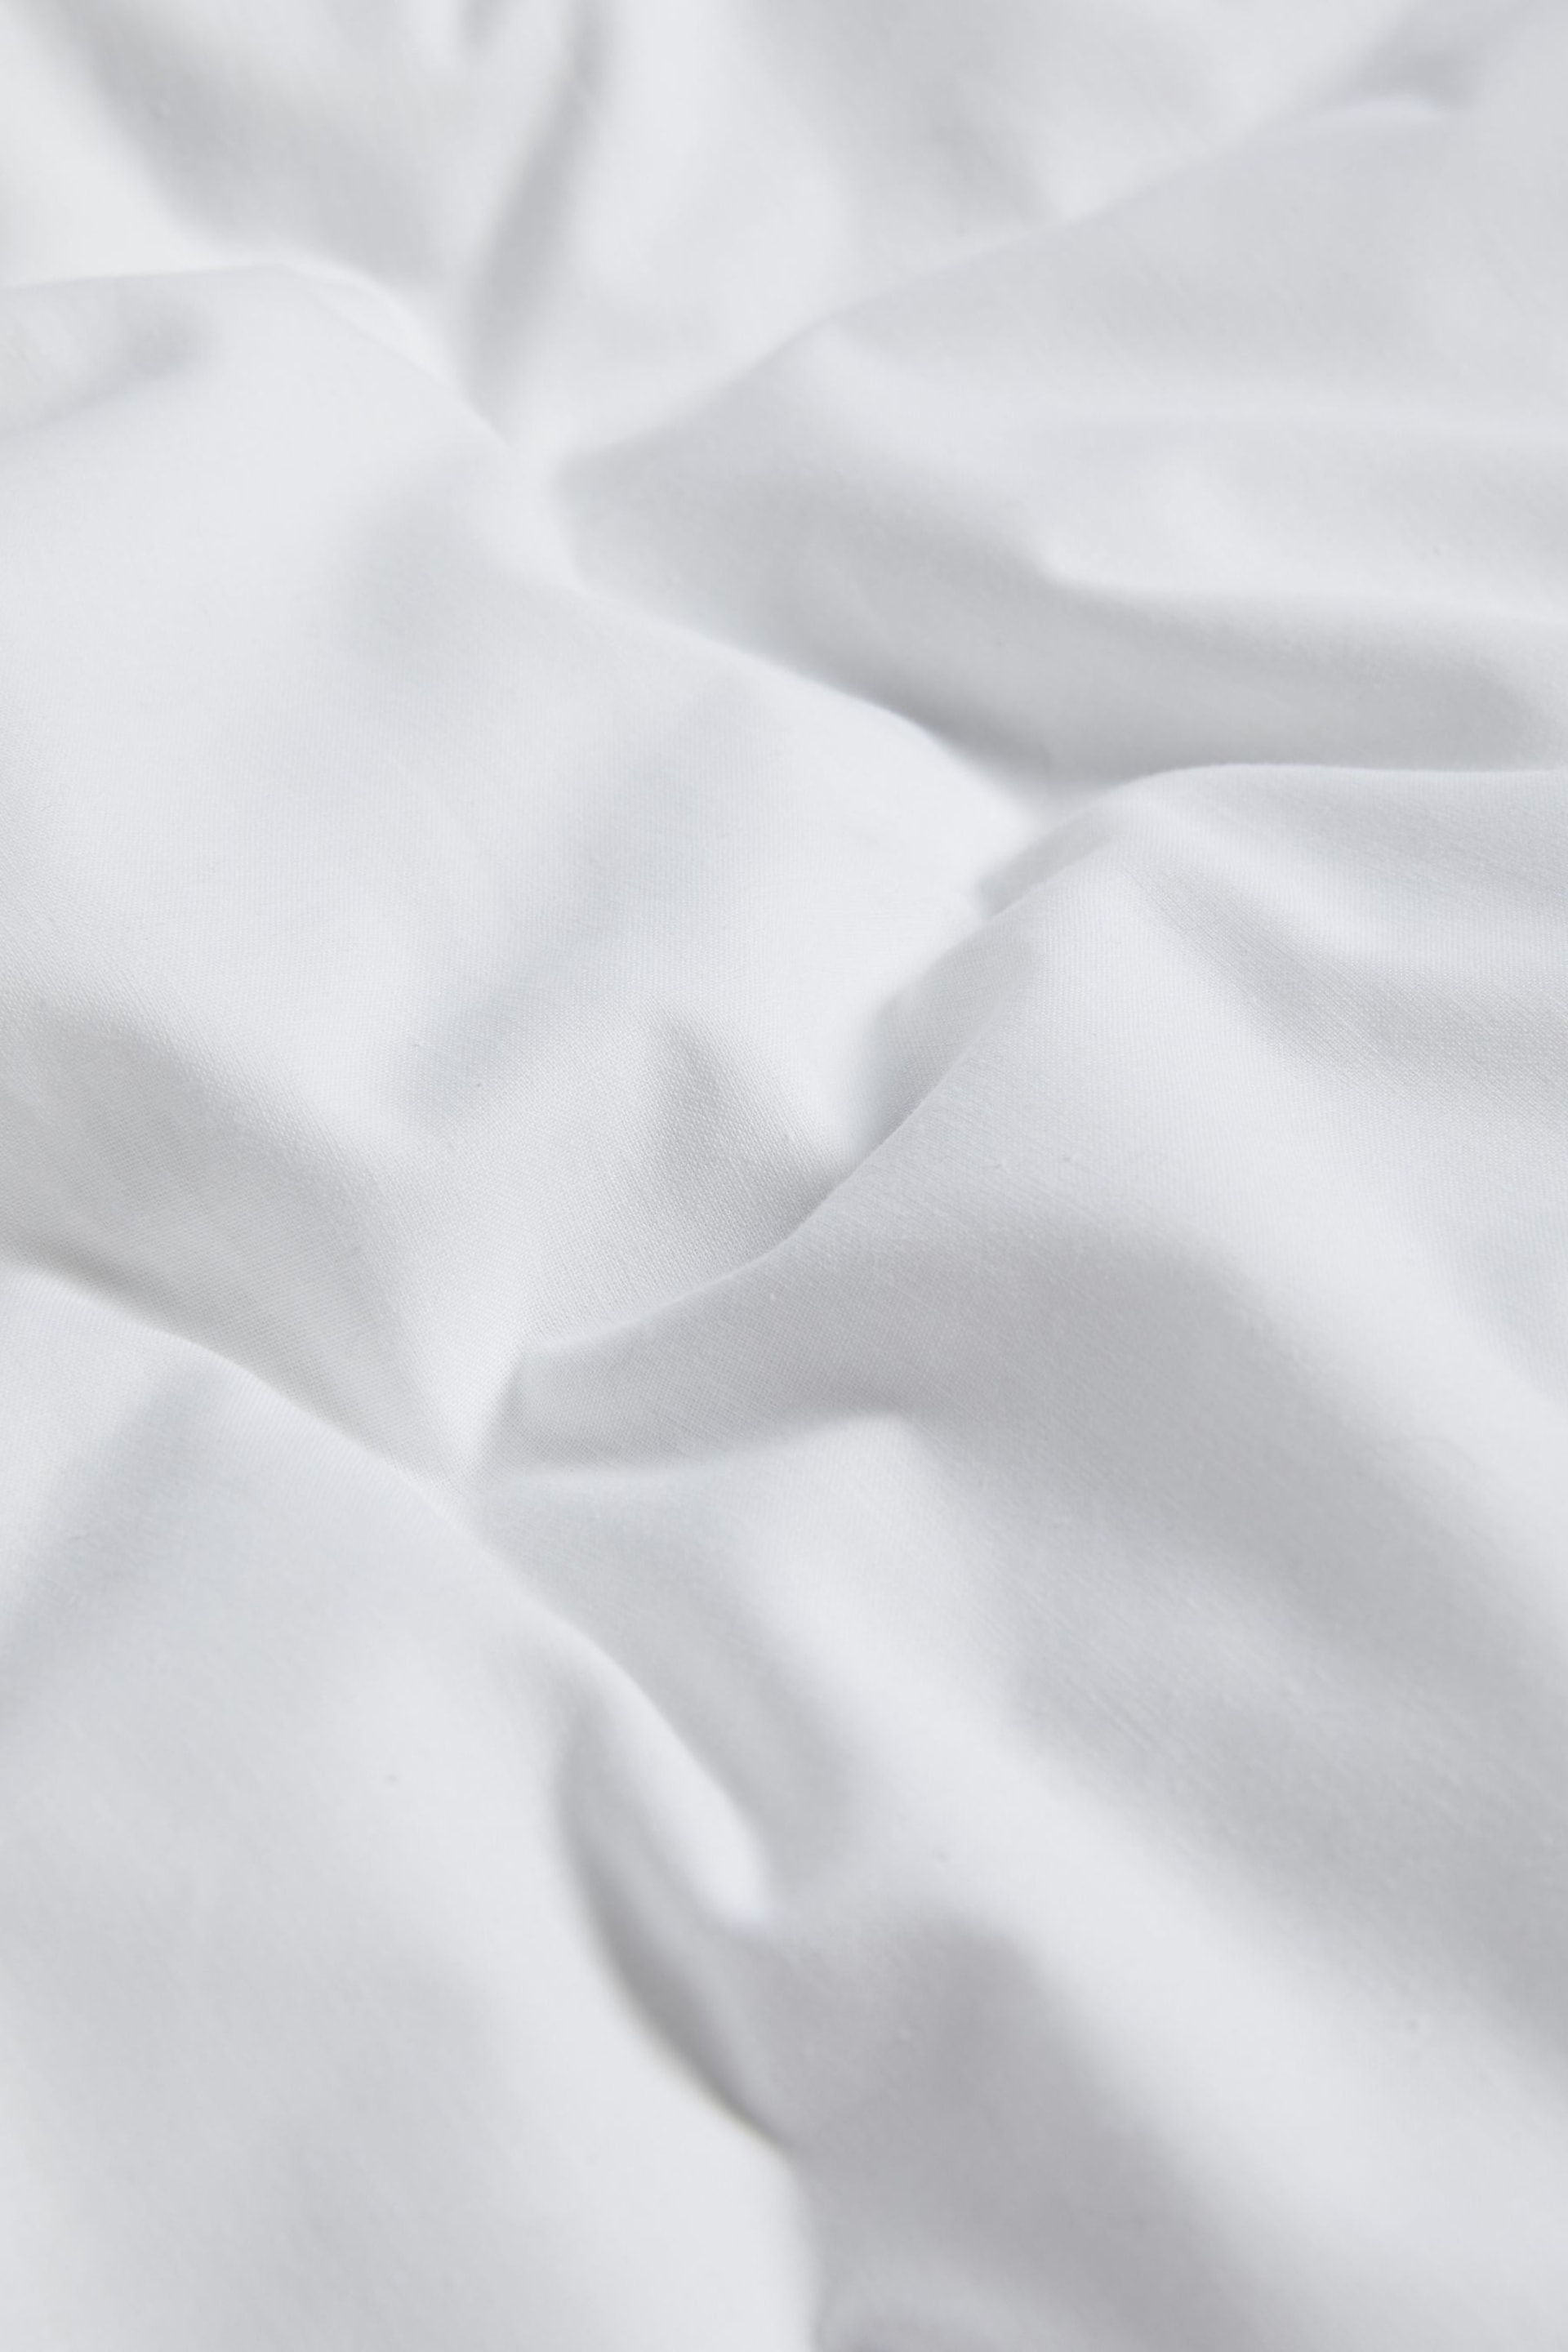 White Fringed Edge 100% Cotton Duvet Cover and Pillowcase Set - Image 5 of 5